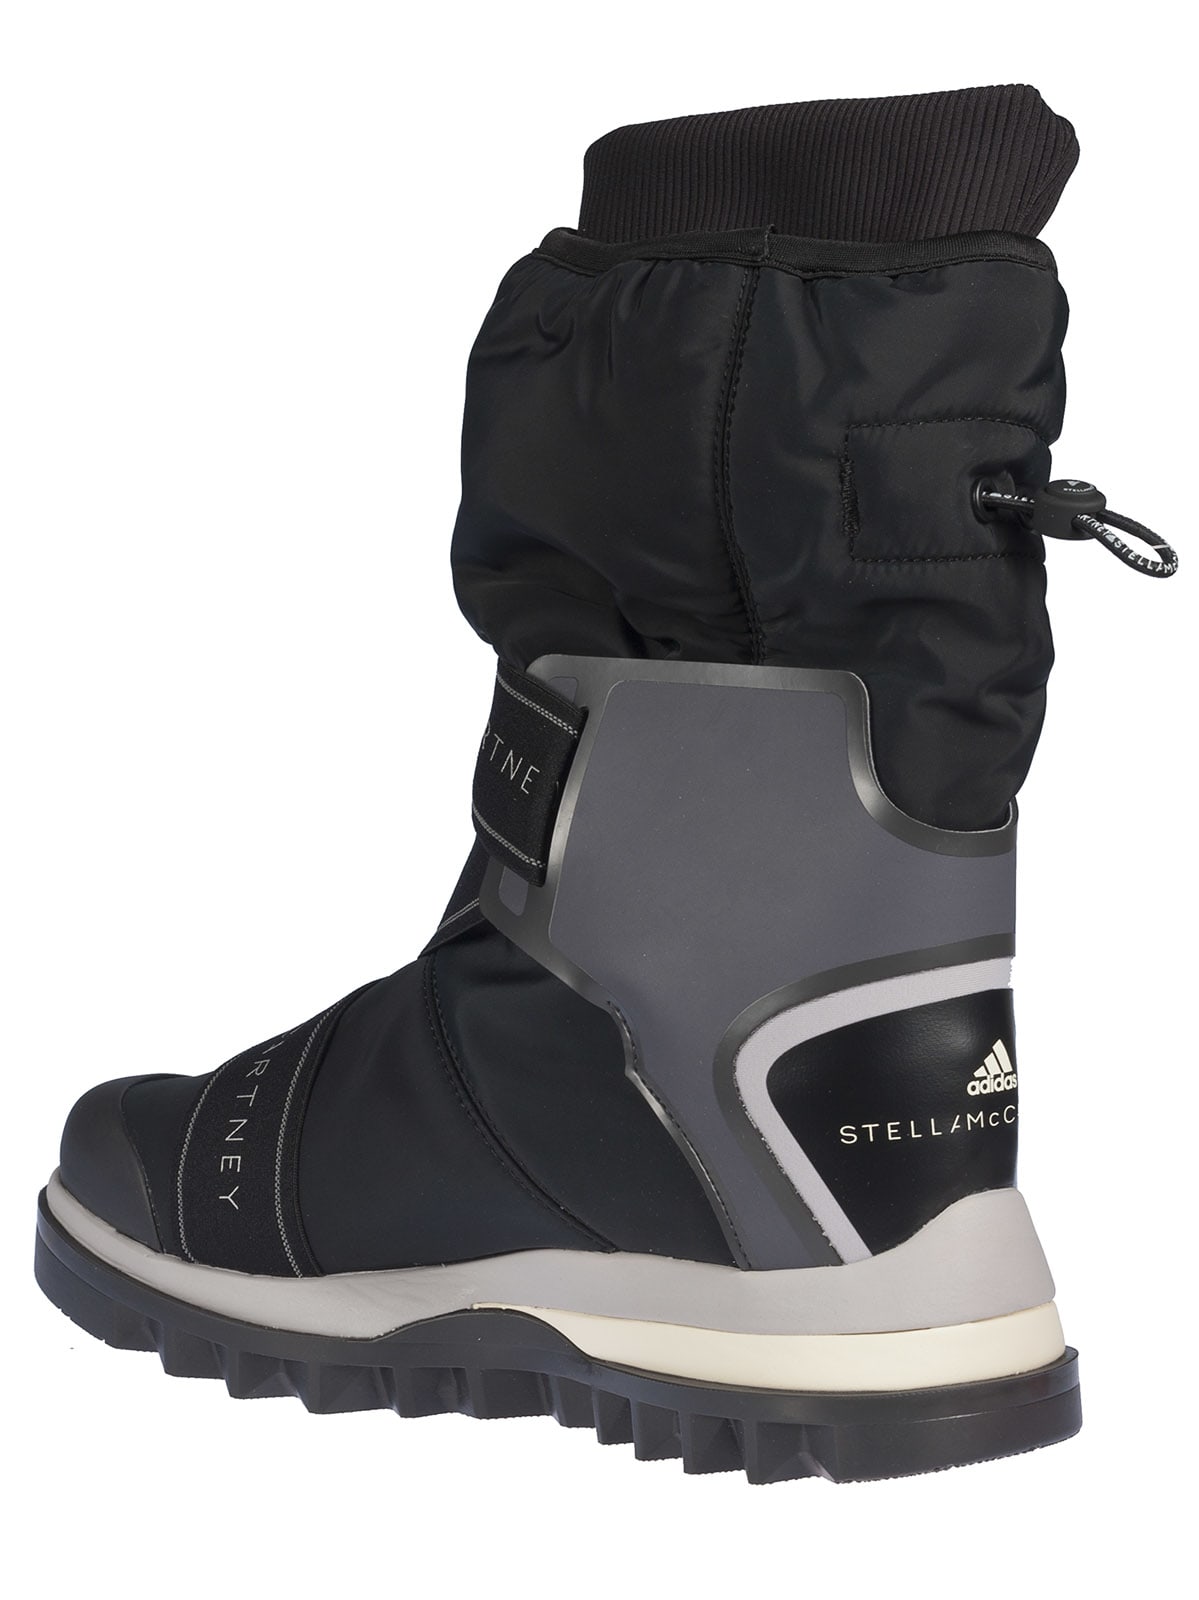 stella mccartney winter boots adidas